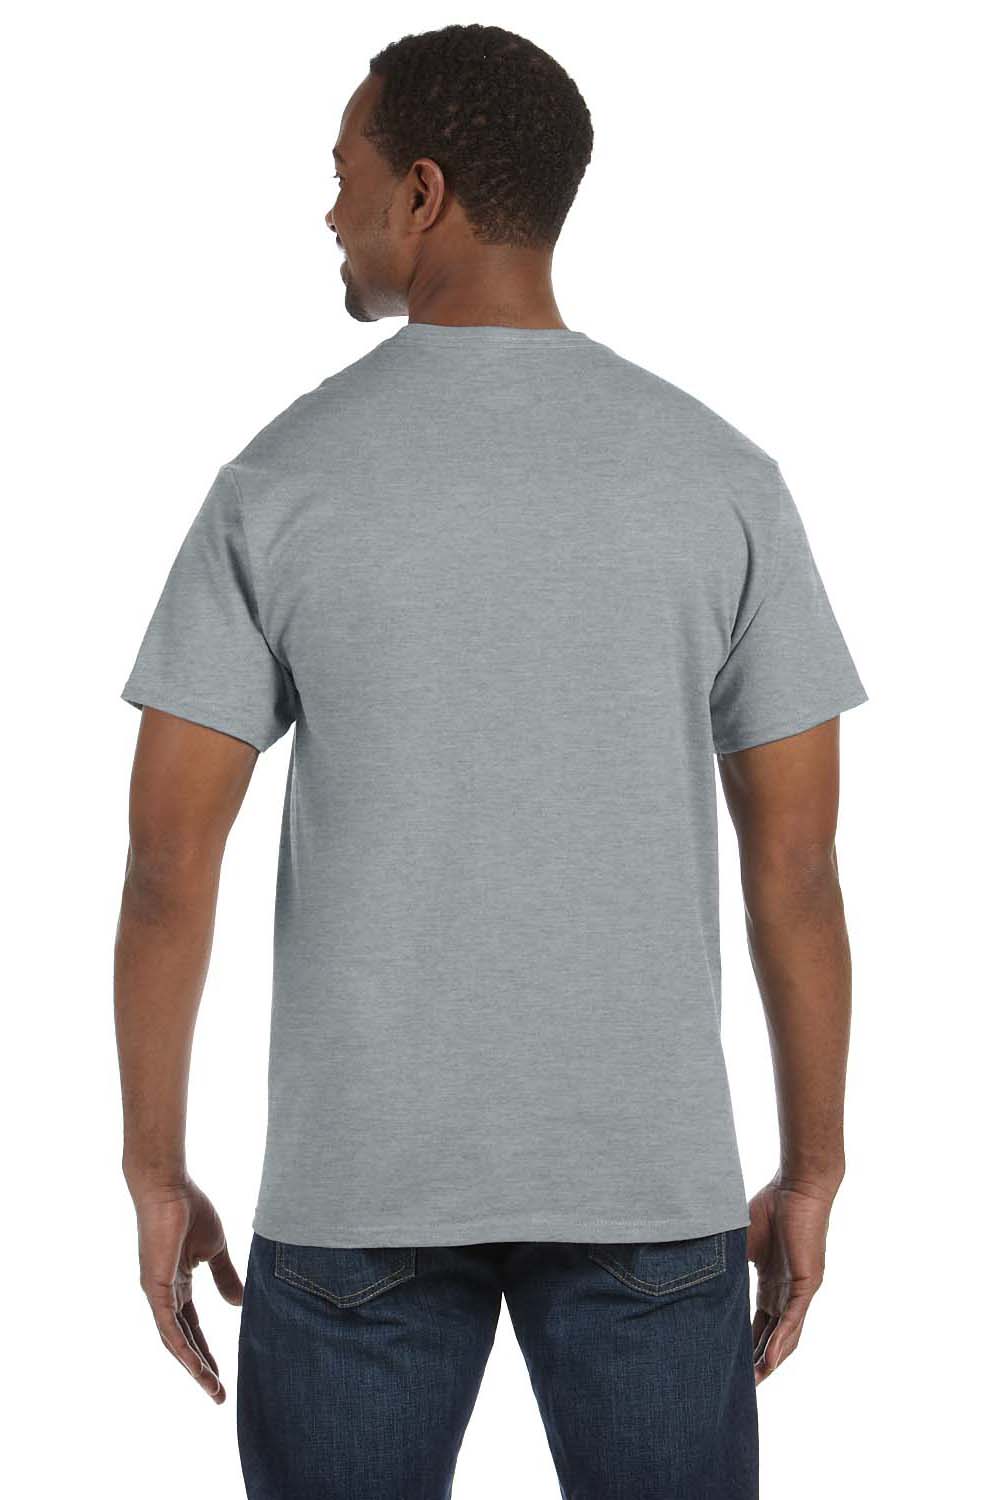 Jerzees 29M Mens Dri-Power Moisture Wicking Short Sleeve Crewneck T-Shirt Heather Grey Back